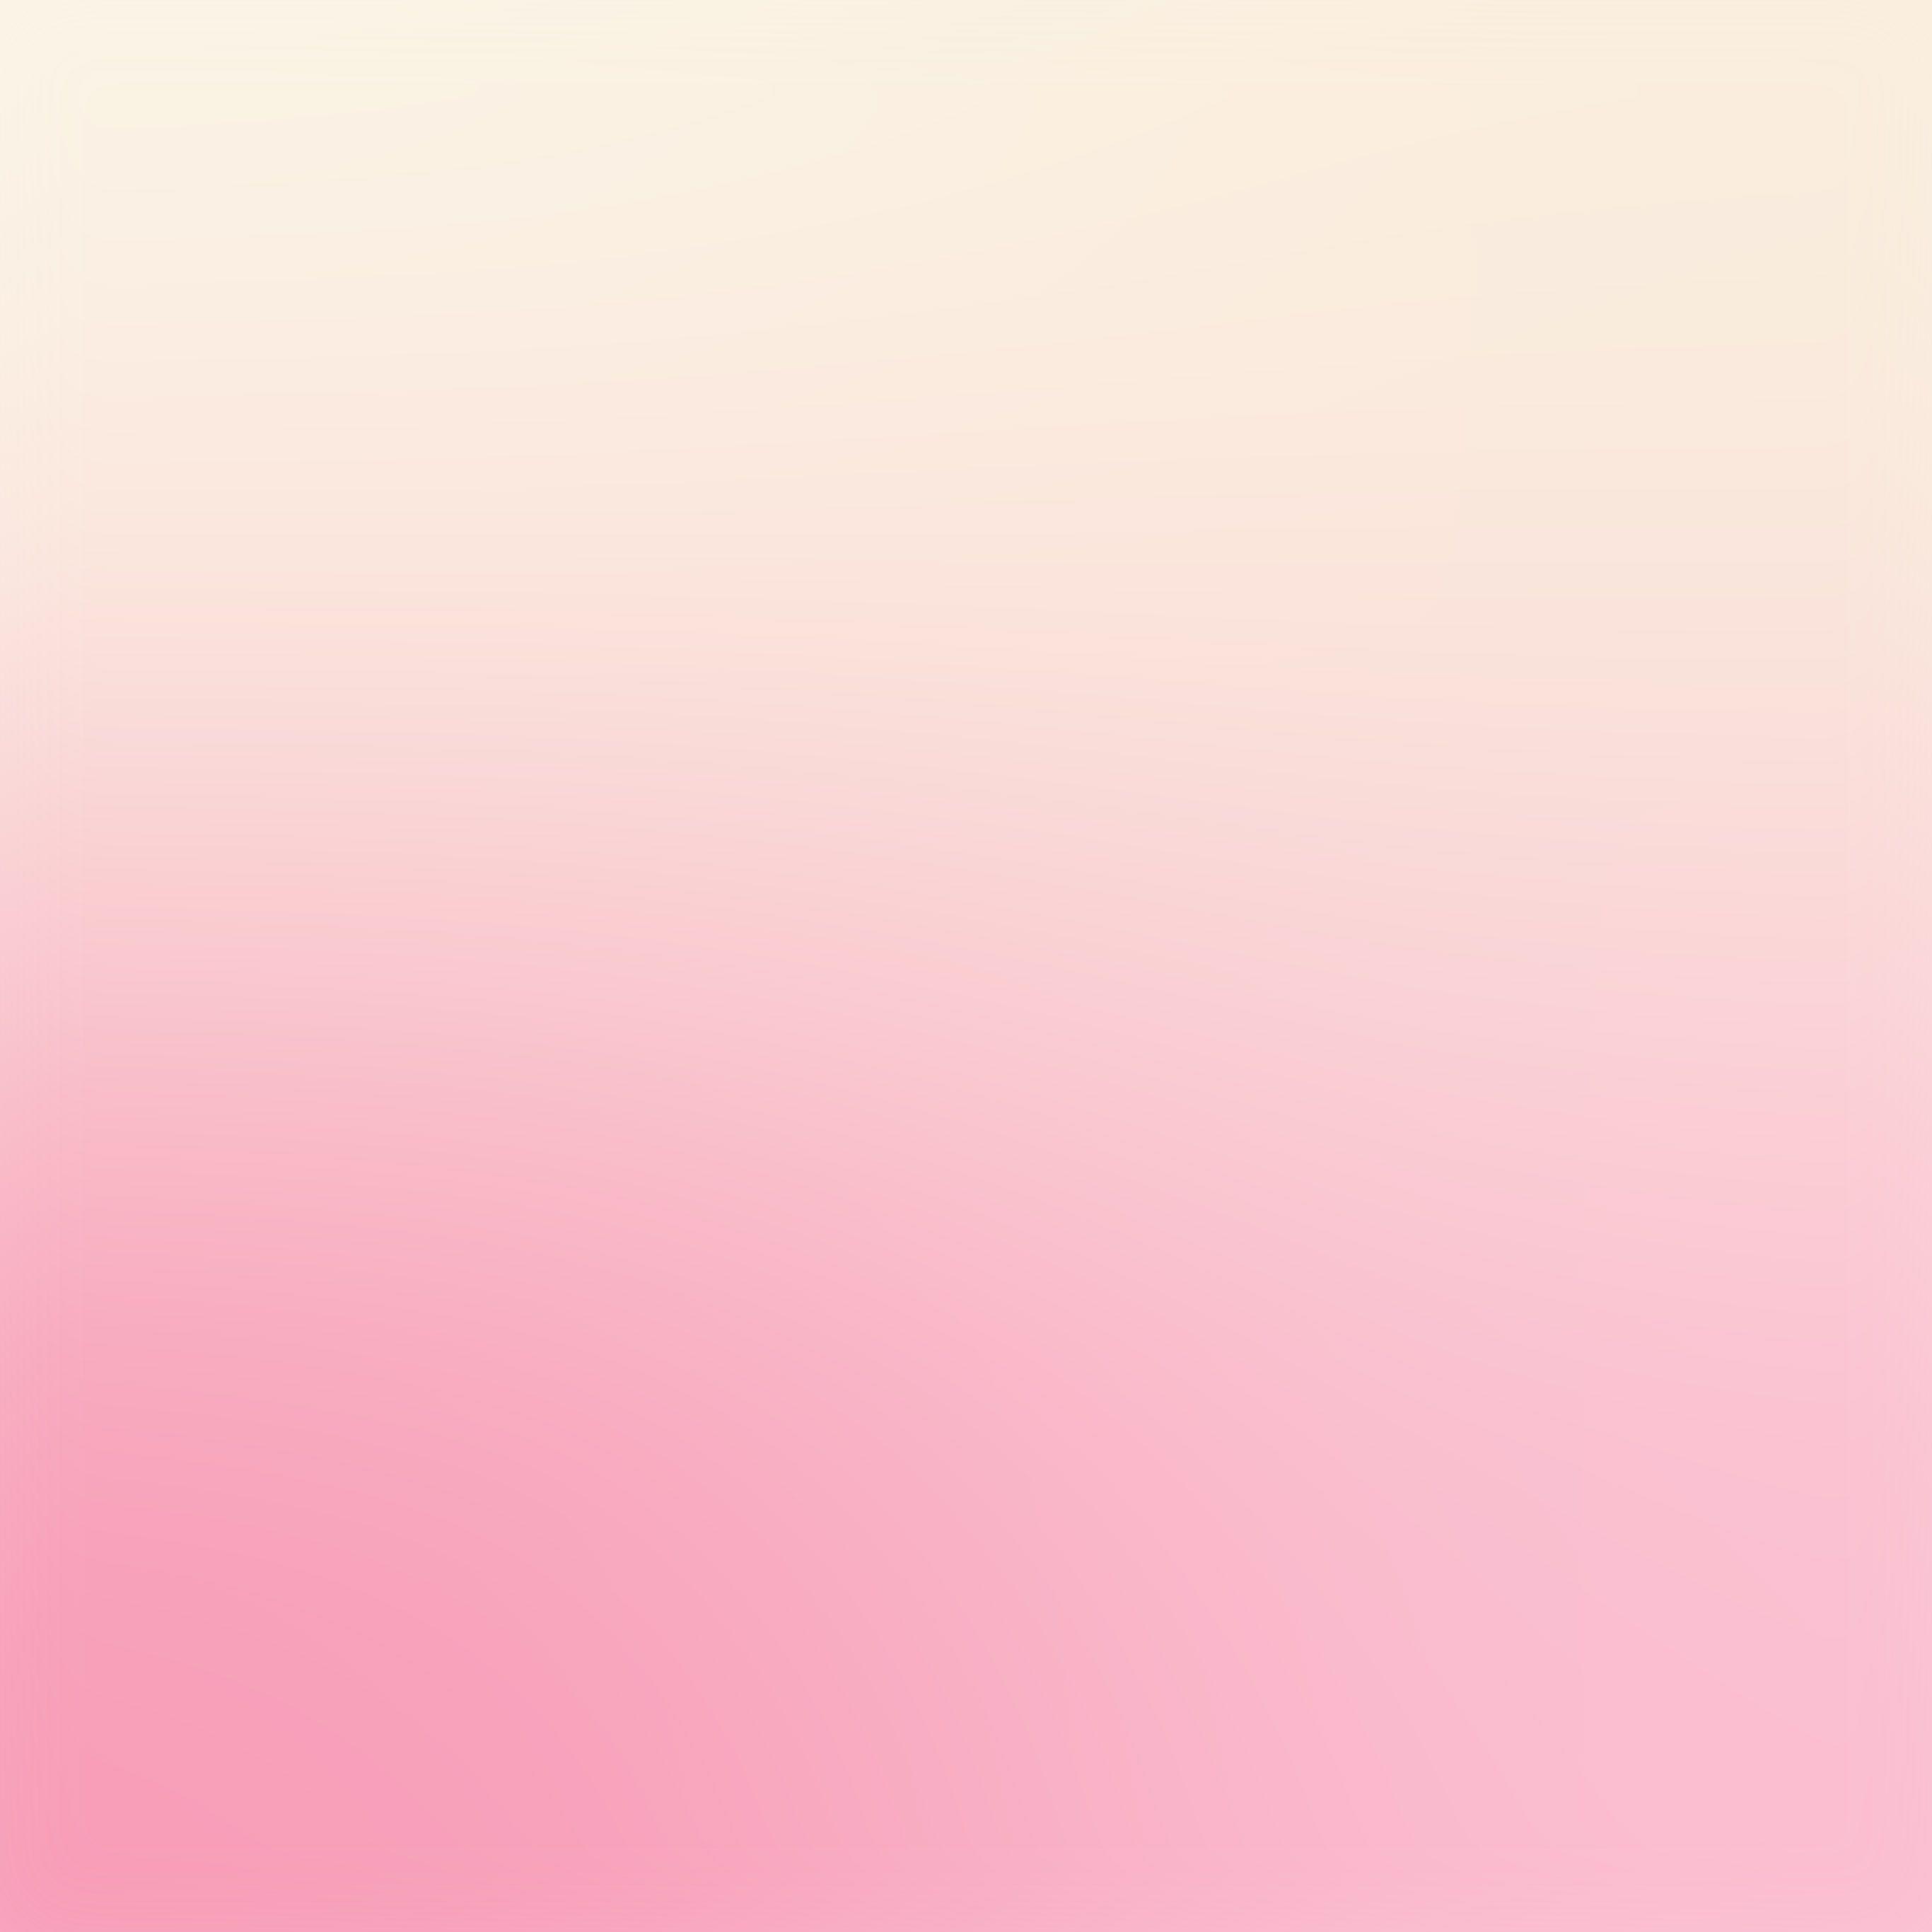 Pink Ipad Pro Wallpaper 